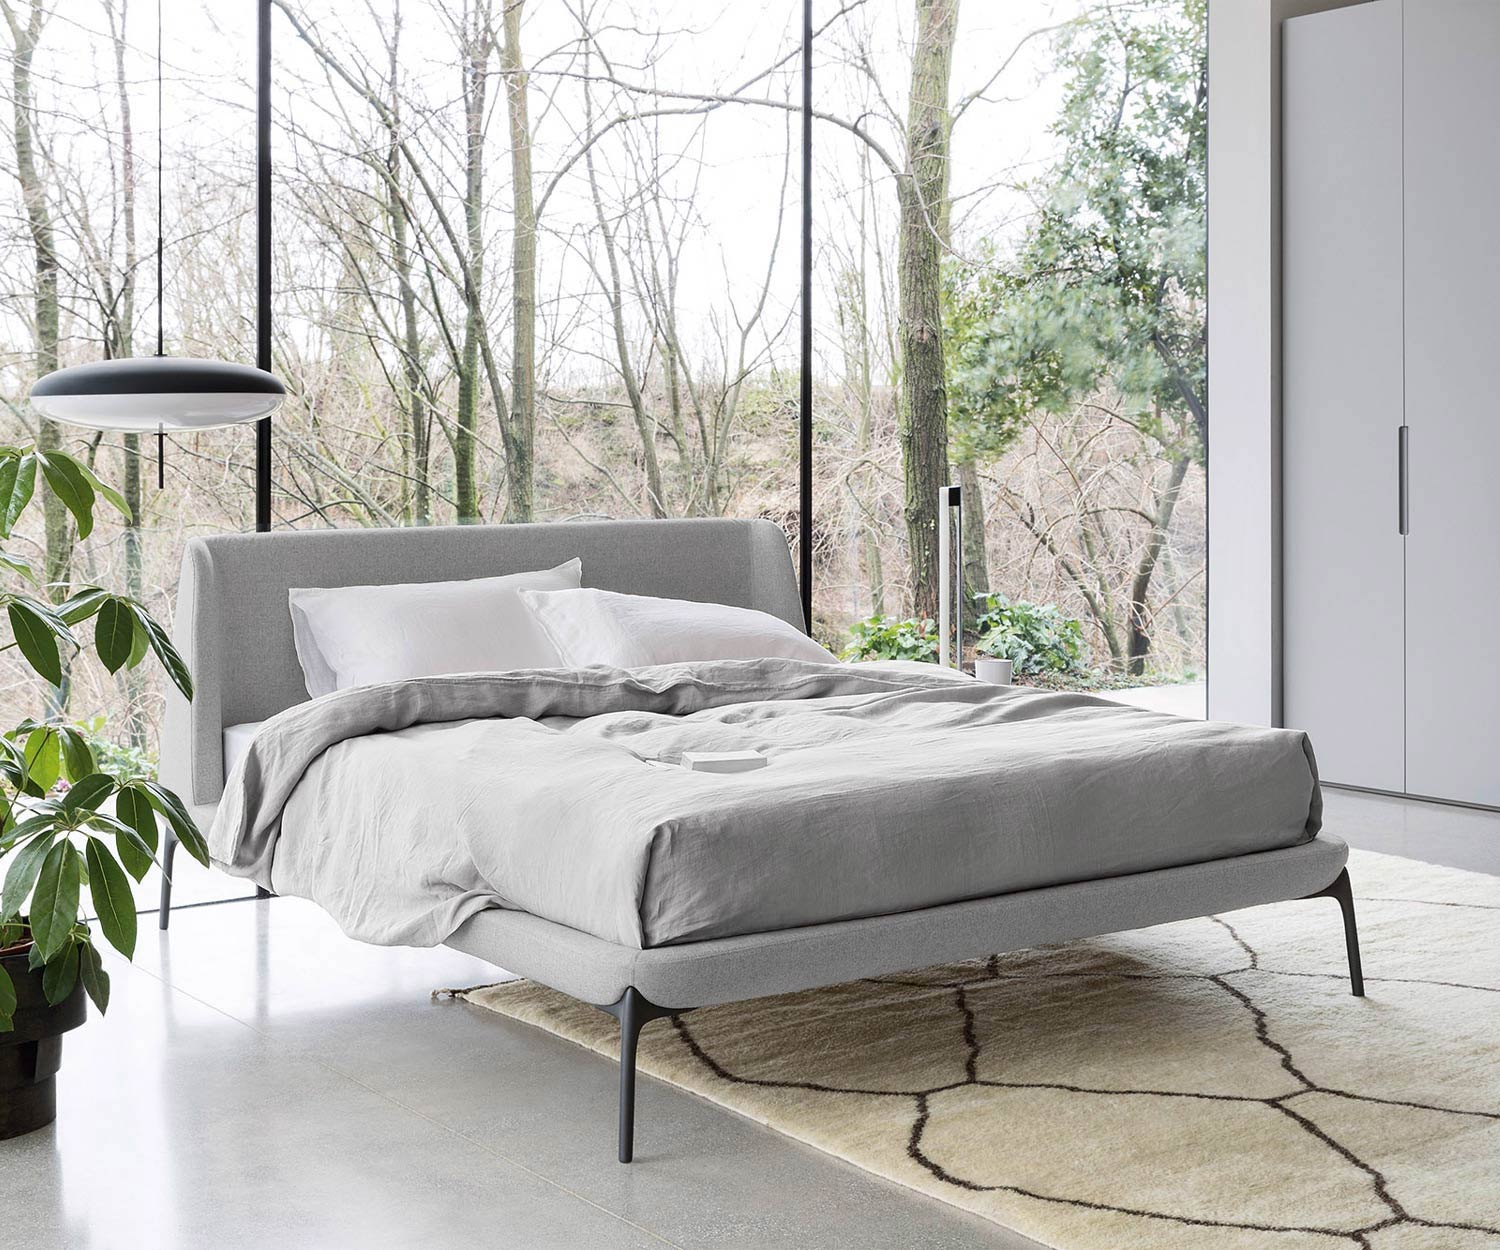 Novamobili Velvet upholstered bed in the bedroom grey fabric cover burnished legs